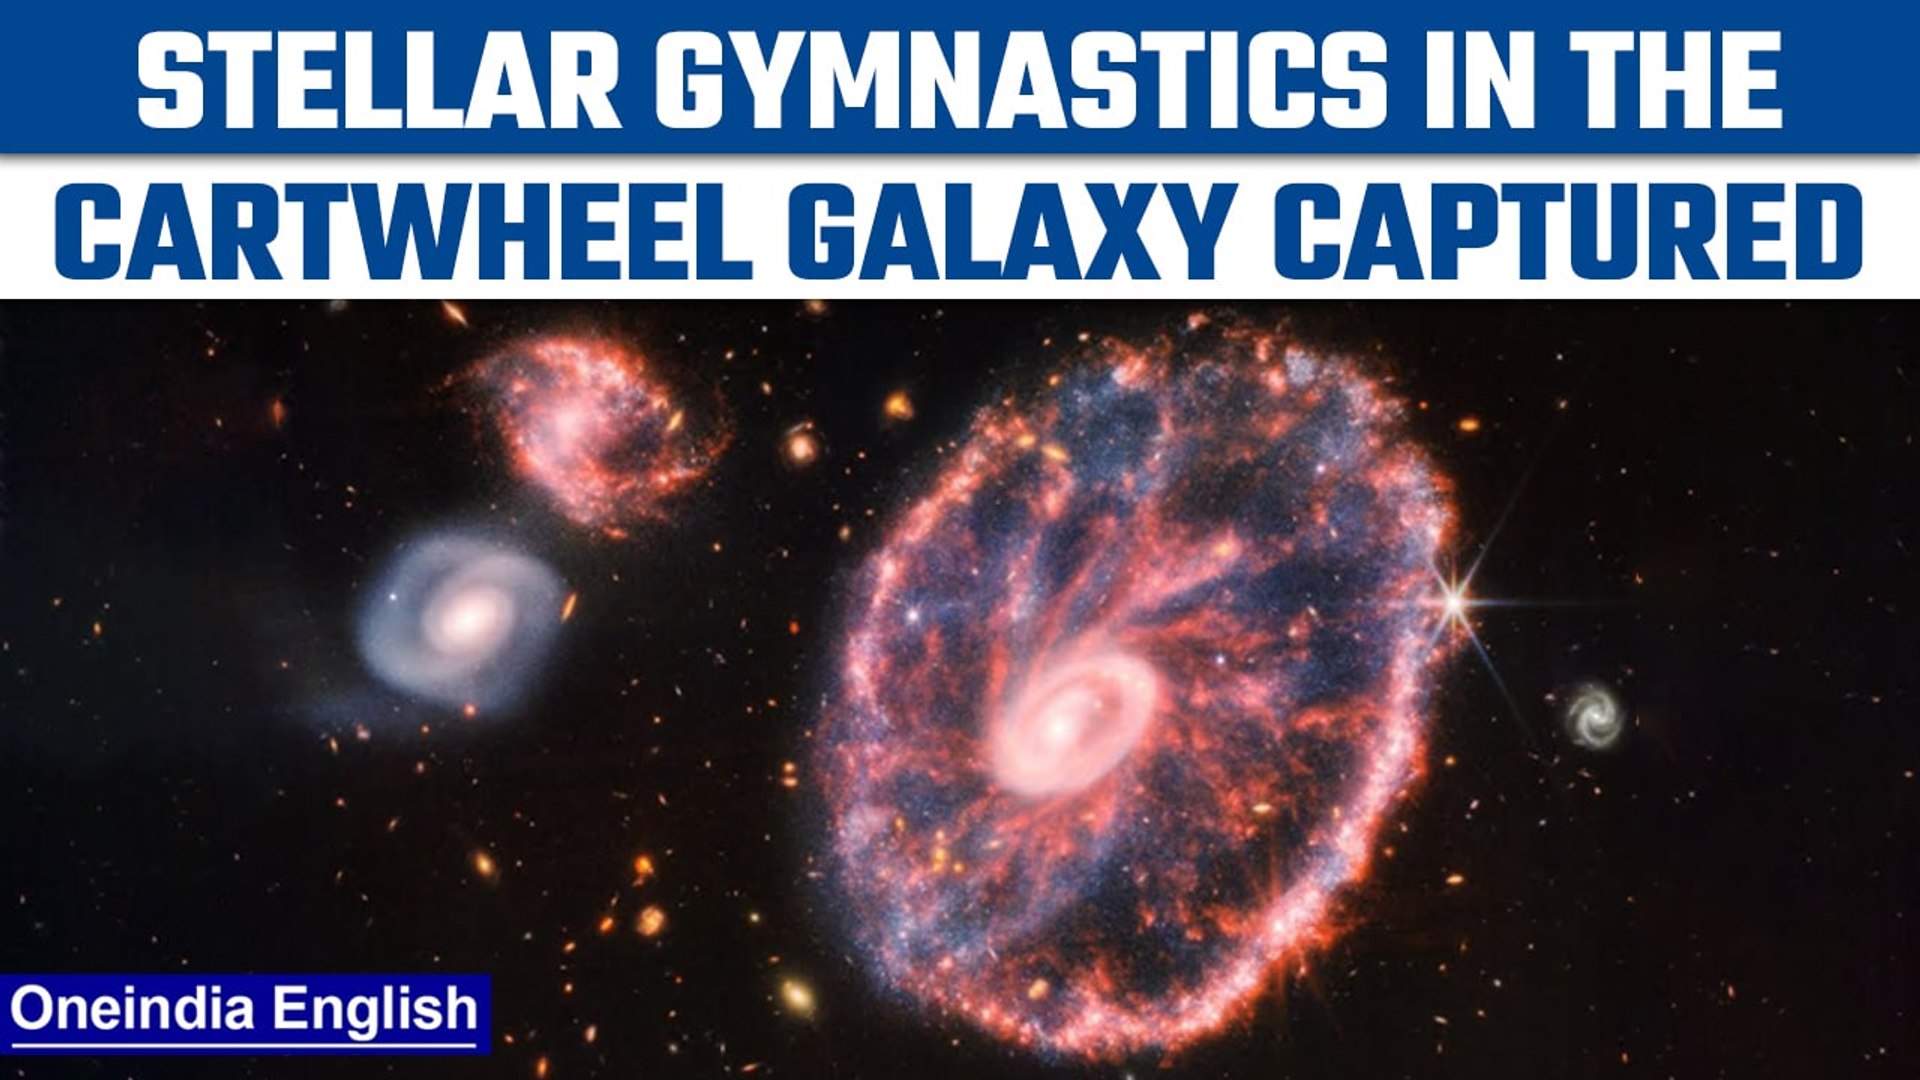 NASA: James Webb Space telescope captures the image of rare Cartwheel galaxy